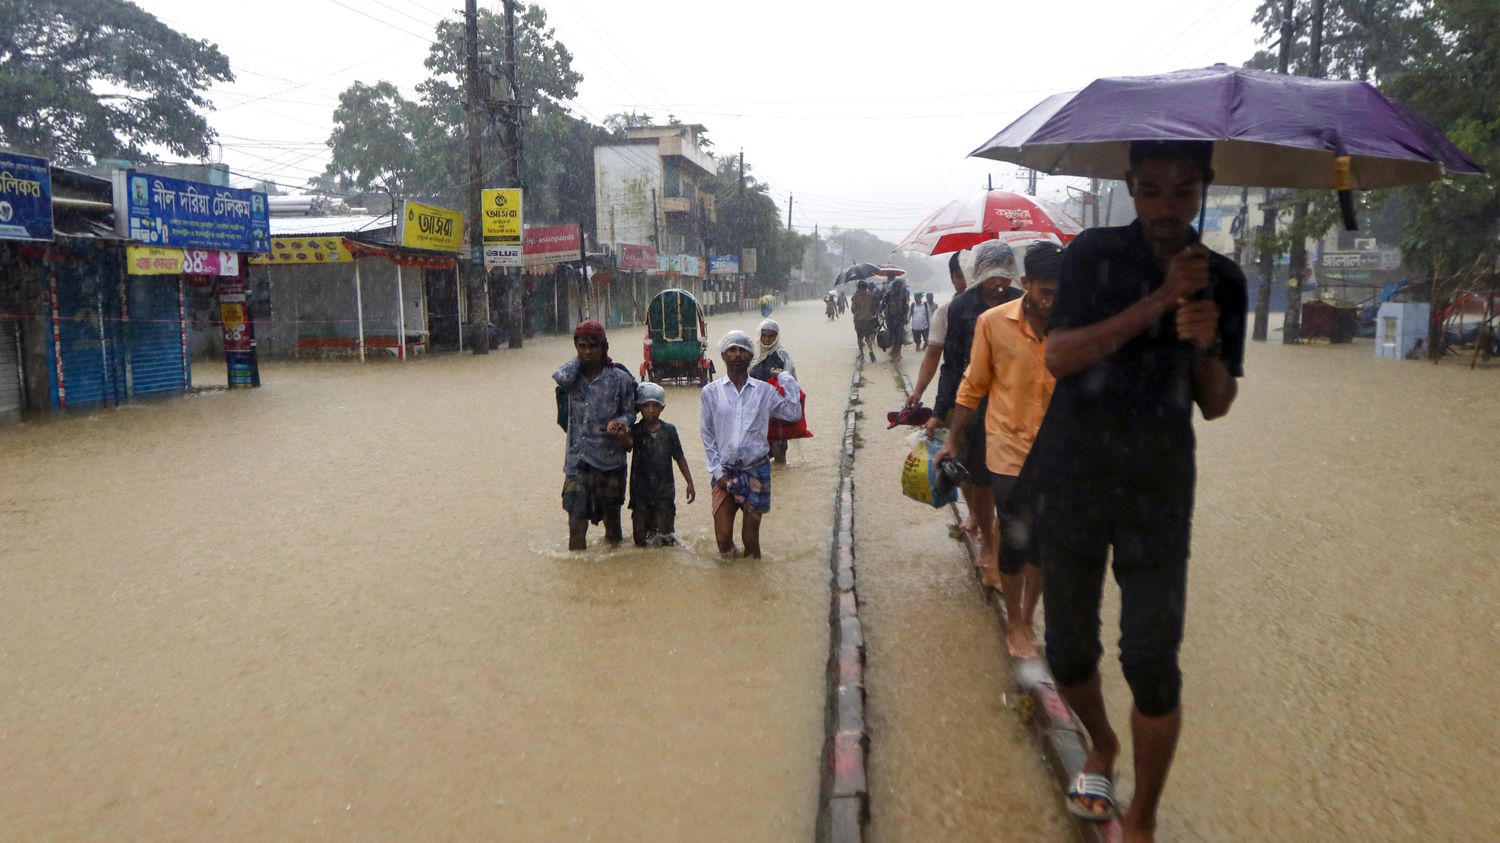 Bangladesh: Floods caused by monsoon rains kill at least 25
